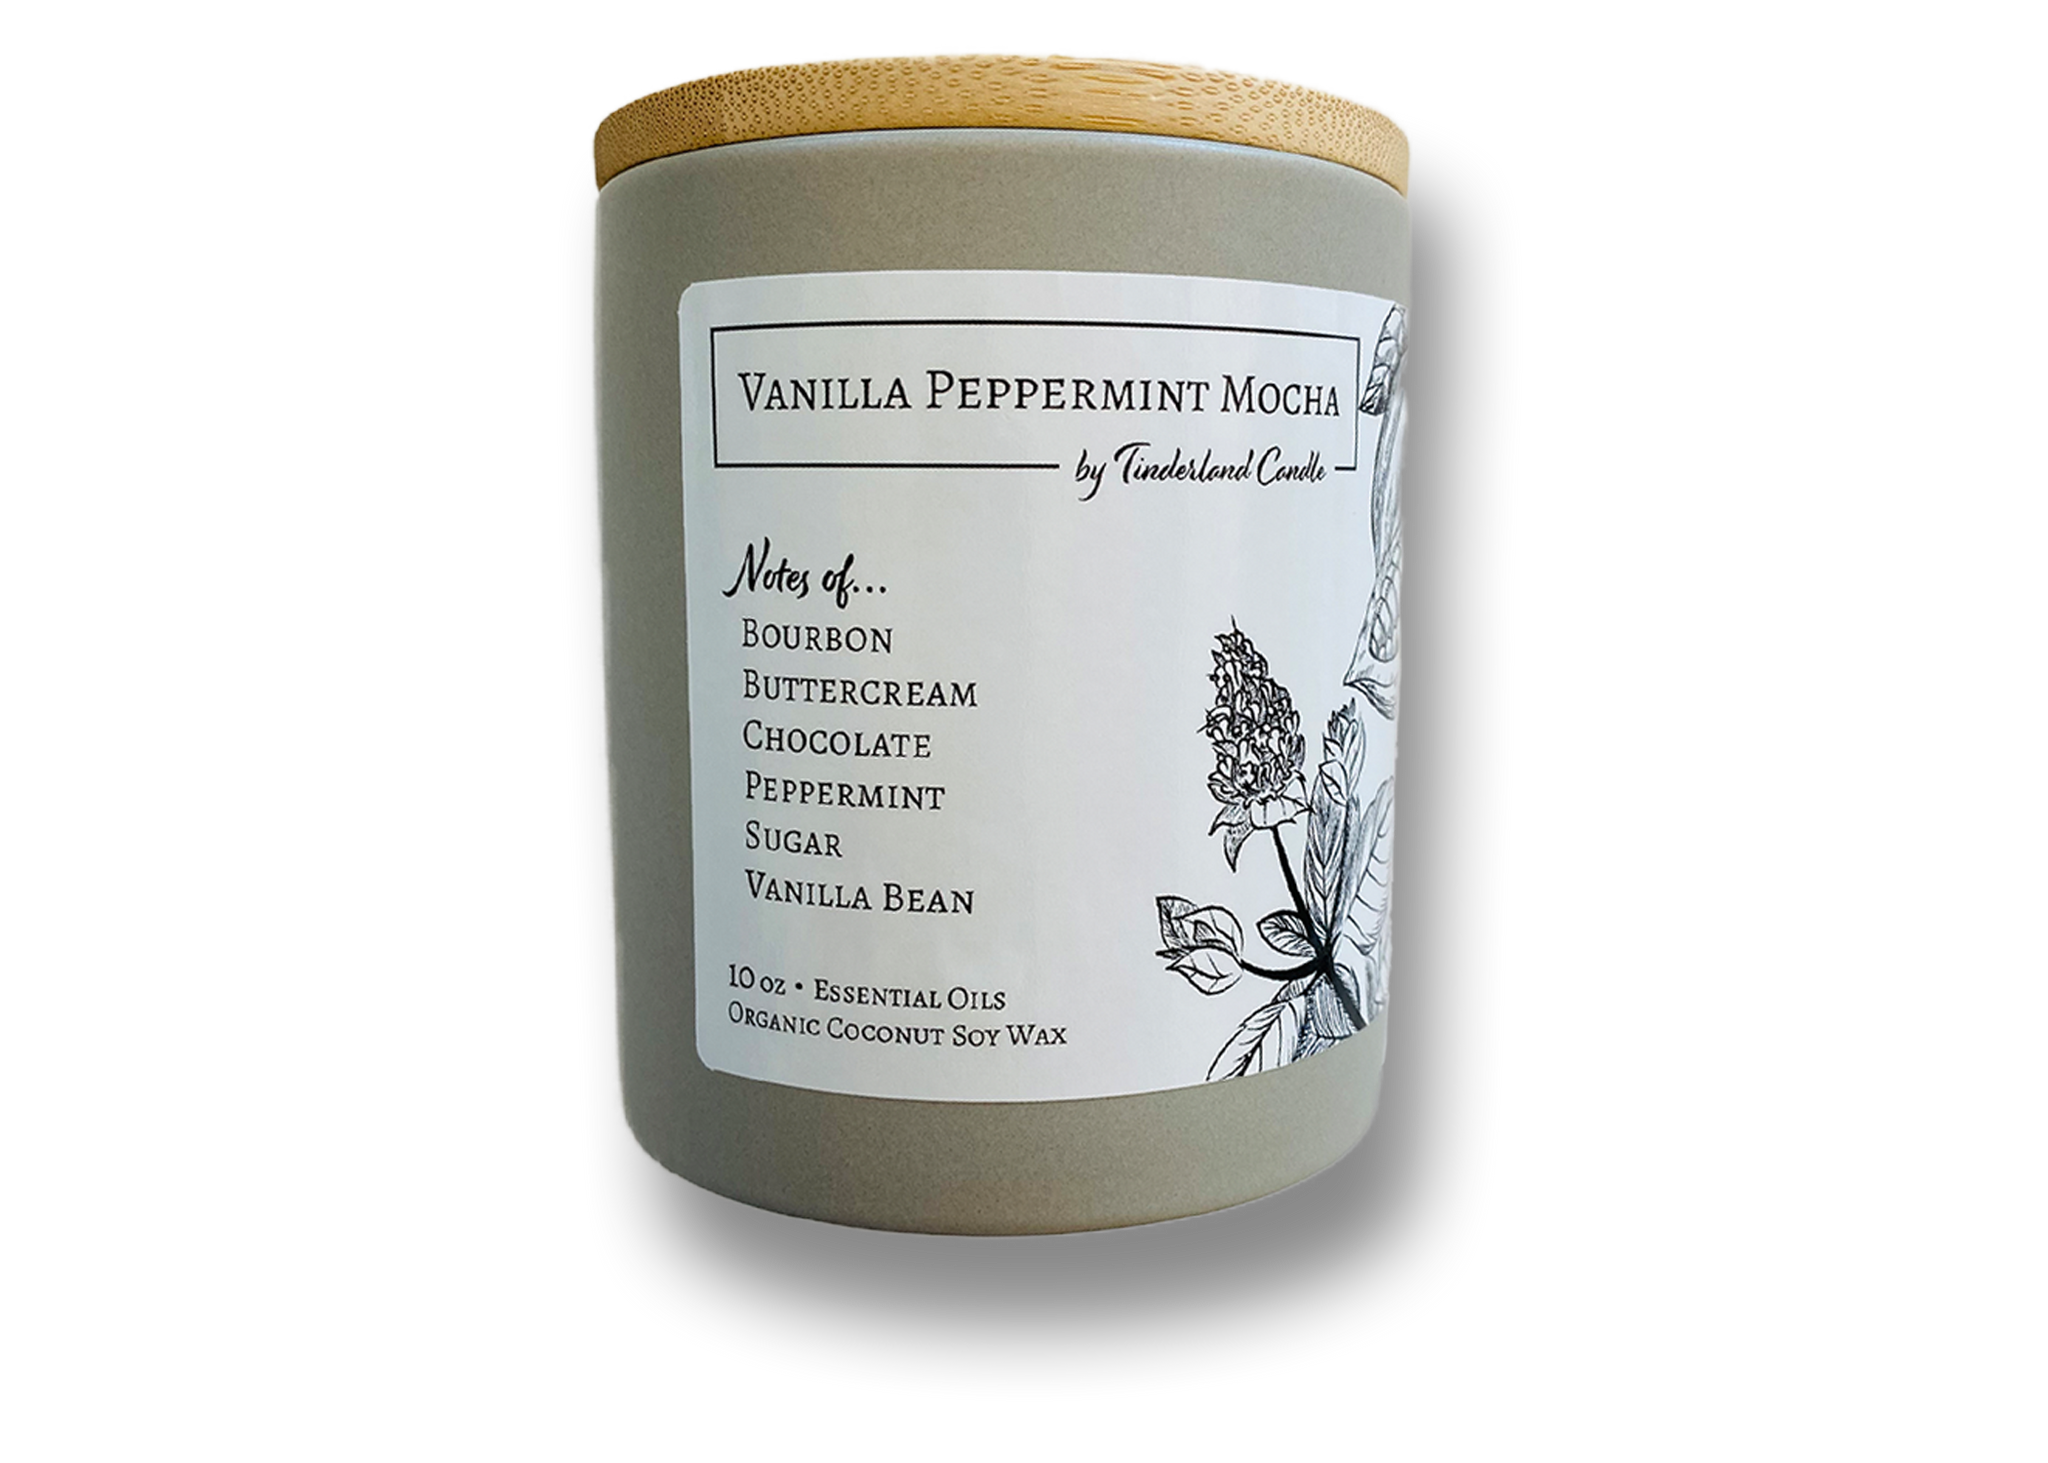 Vanilla Peppermint Mocha Candle